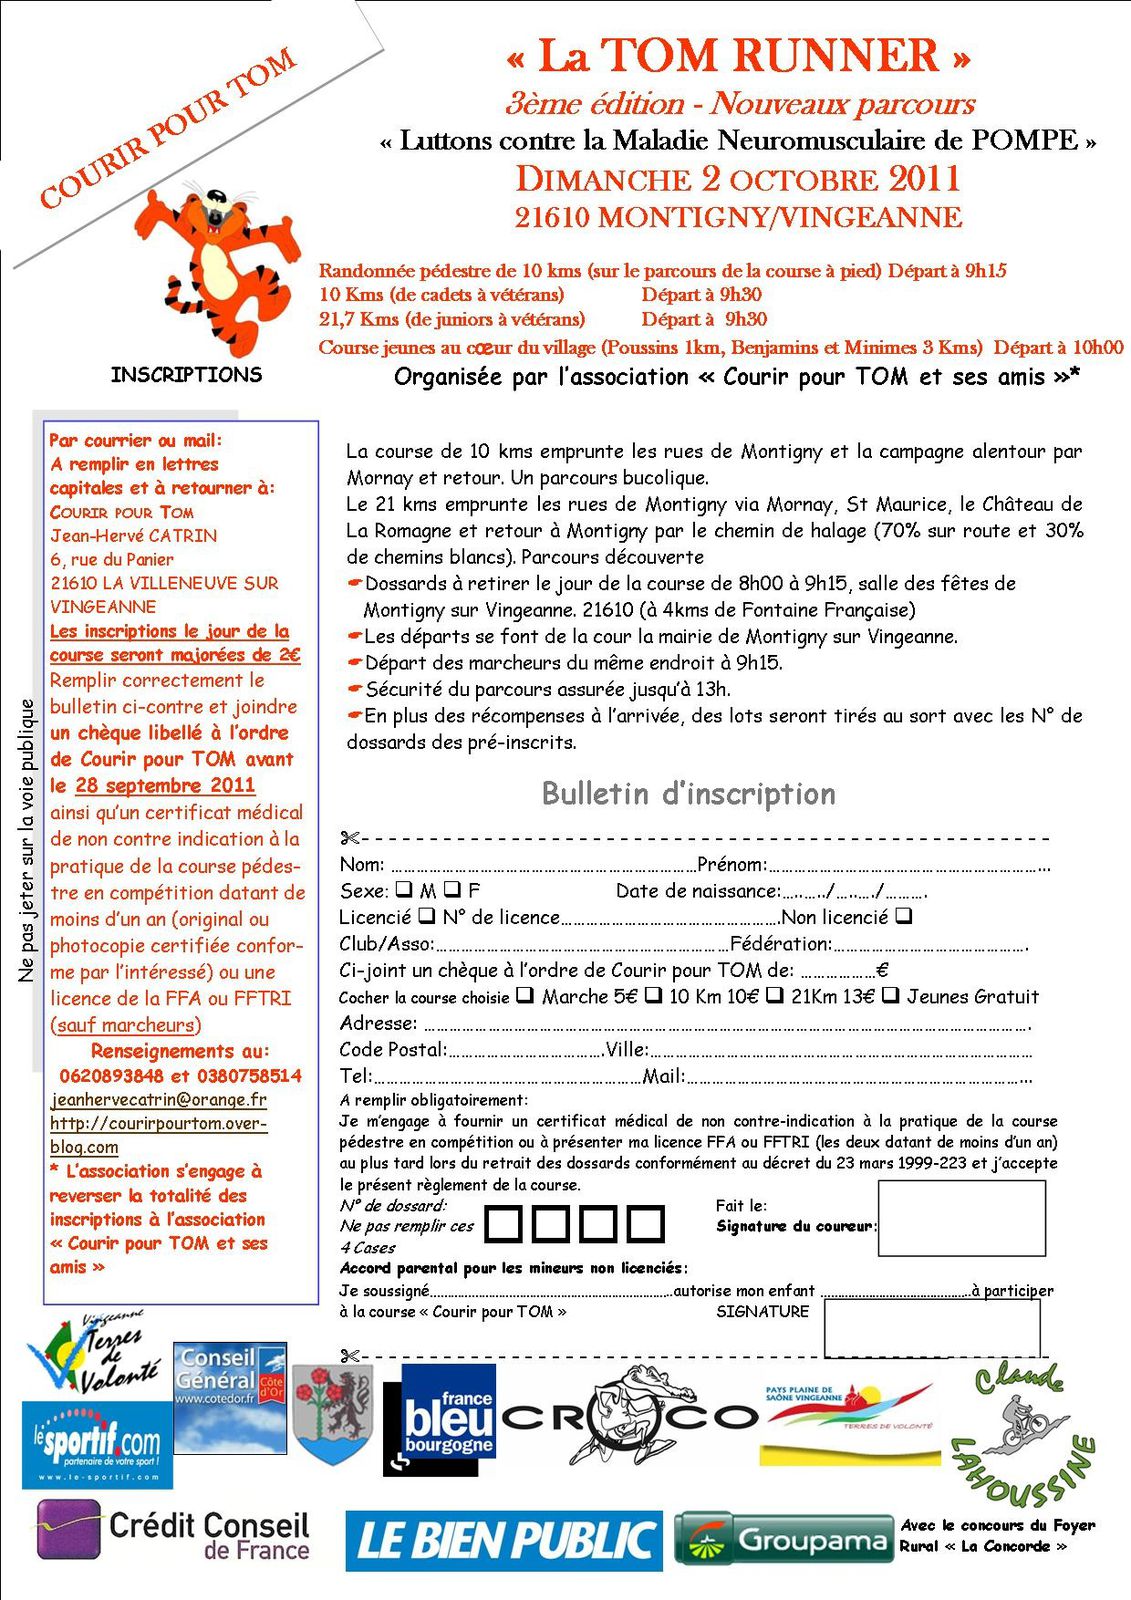 Courir-pour-Tom-Bulletin-d-inscription2011.jpg